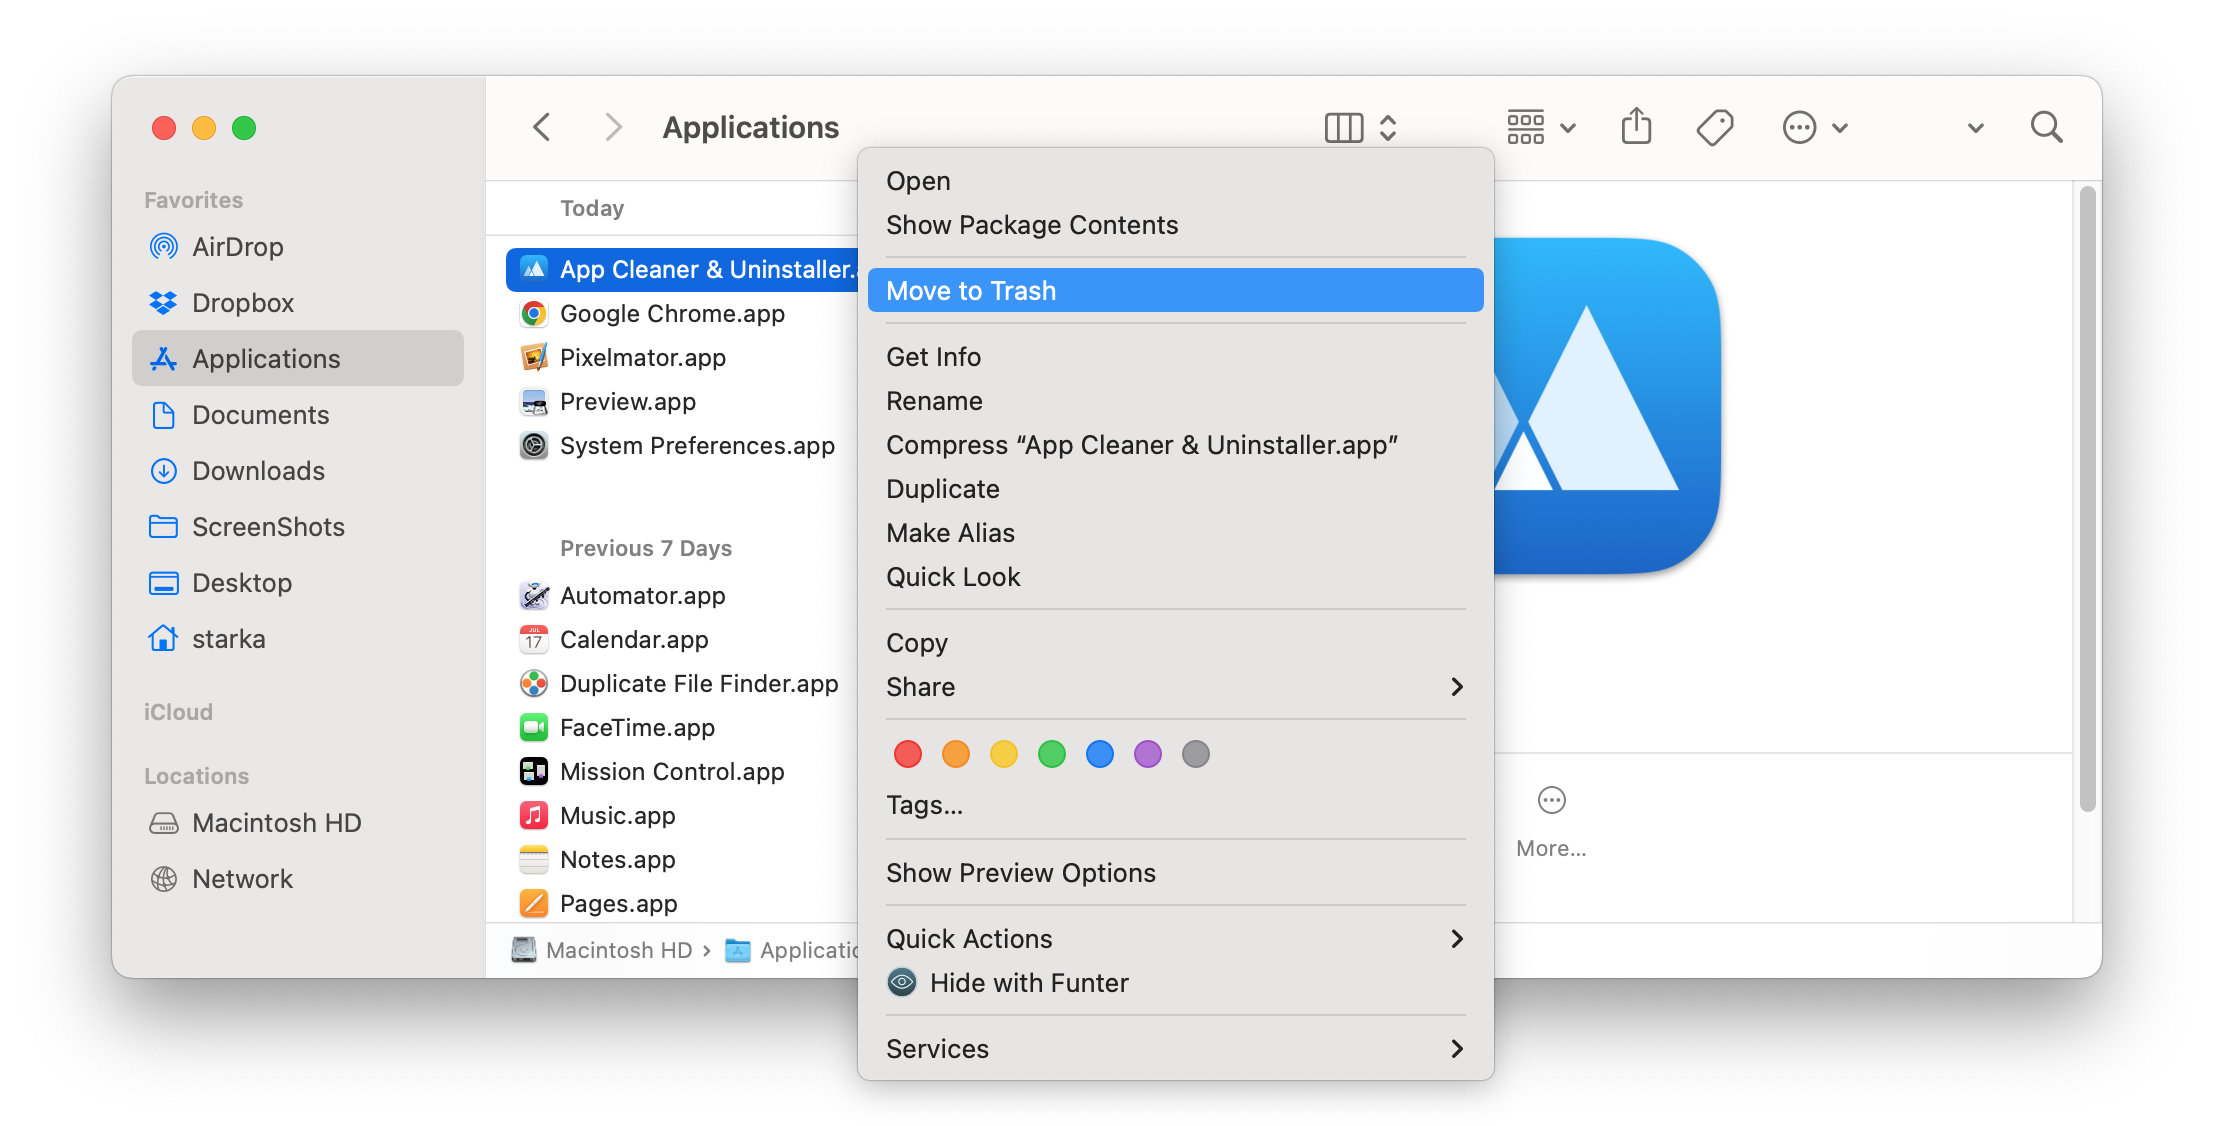 removing app cleaner uninstaller from the Applications folder